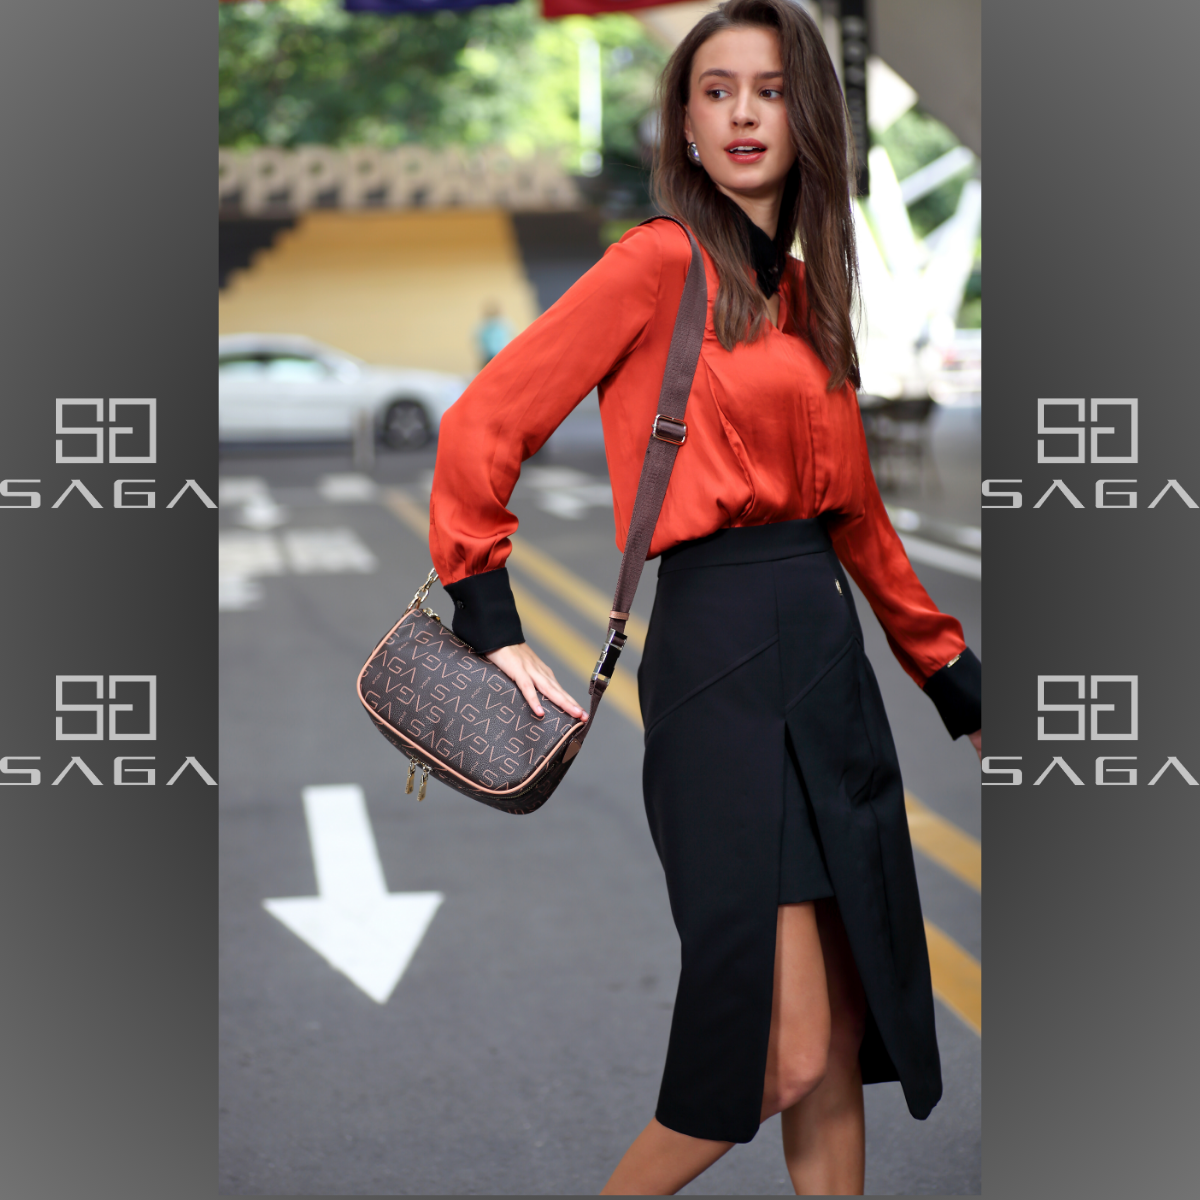 Saga brand women's crossbody bag - practical and elegant model, width 25.5 cm